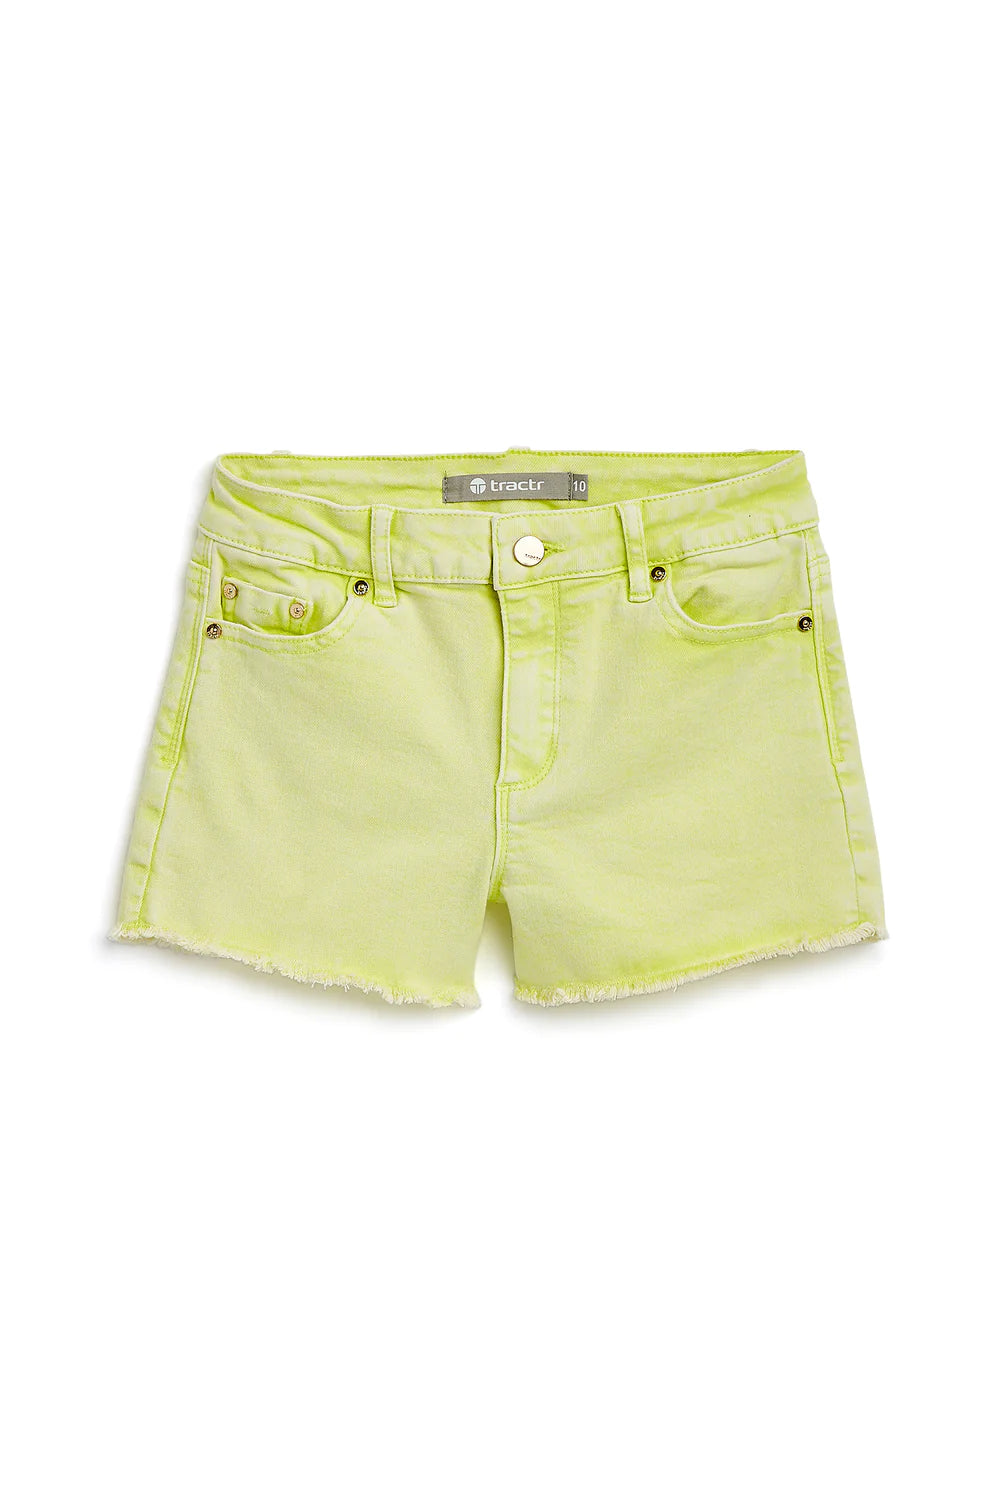 Brittany Shorts in Daiquiri Green